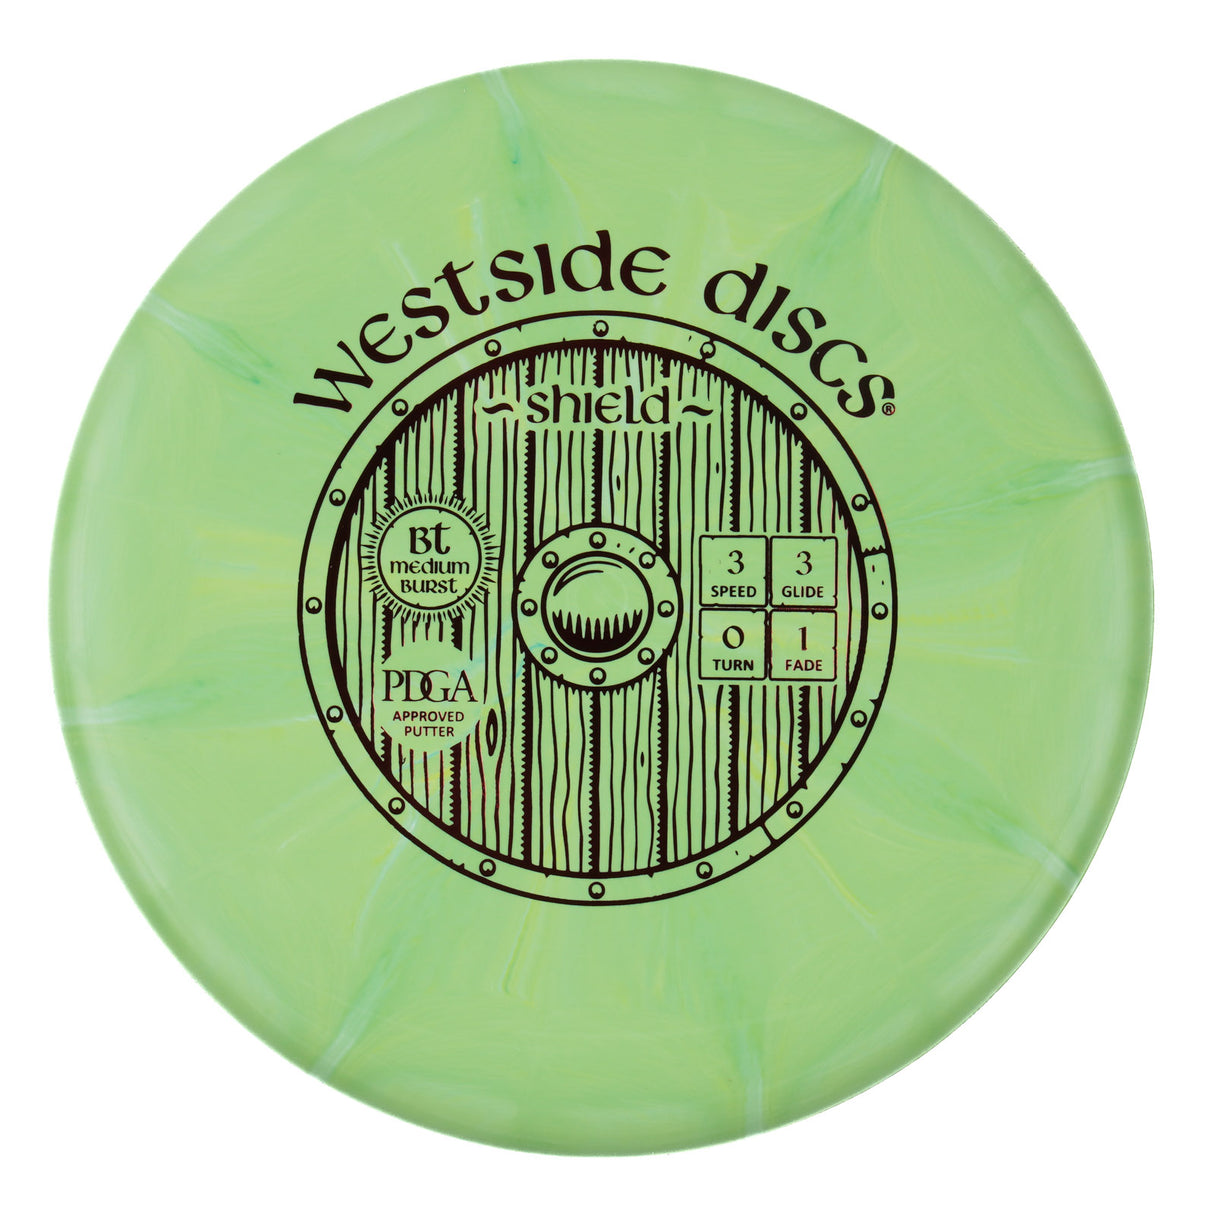 Westside Shield - BT Medium Burst 174g | Style 0004